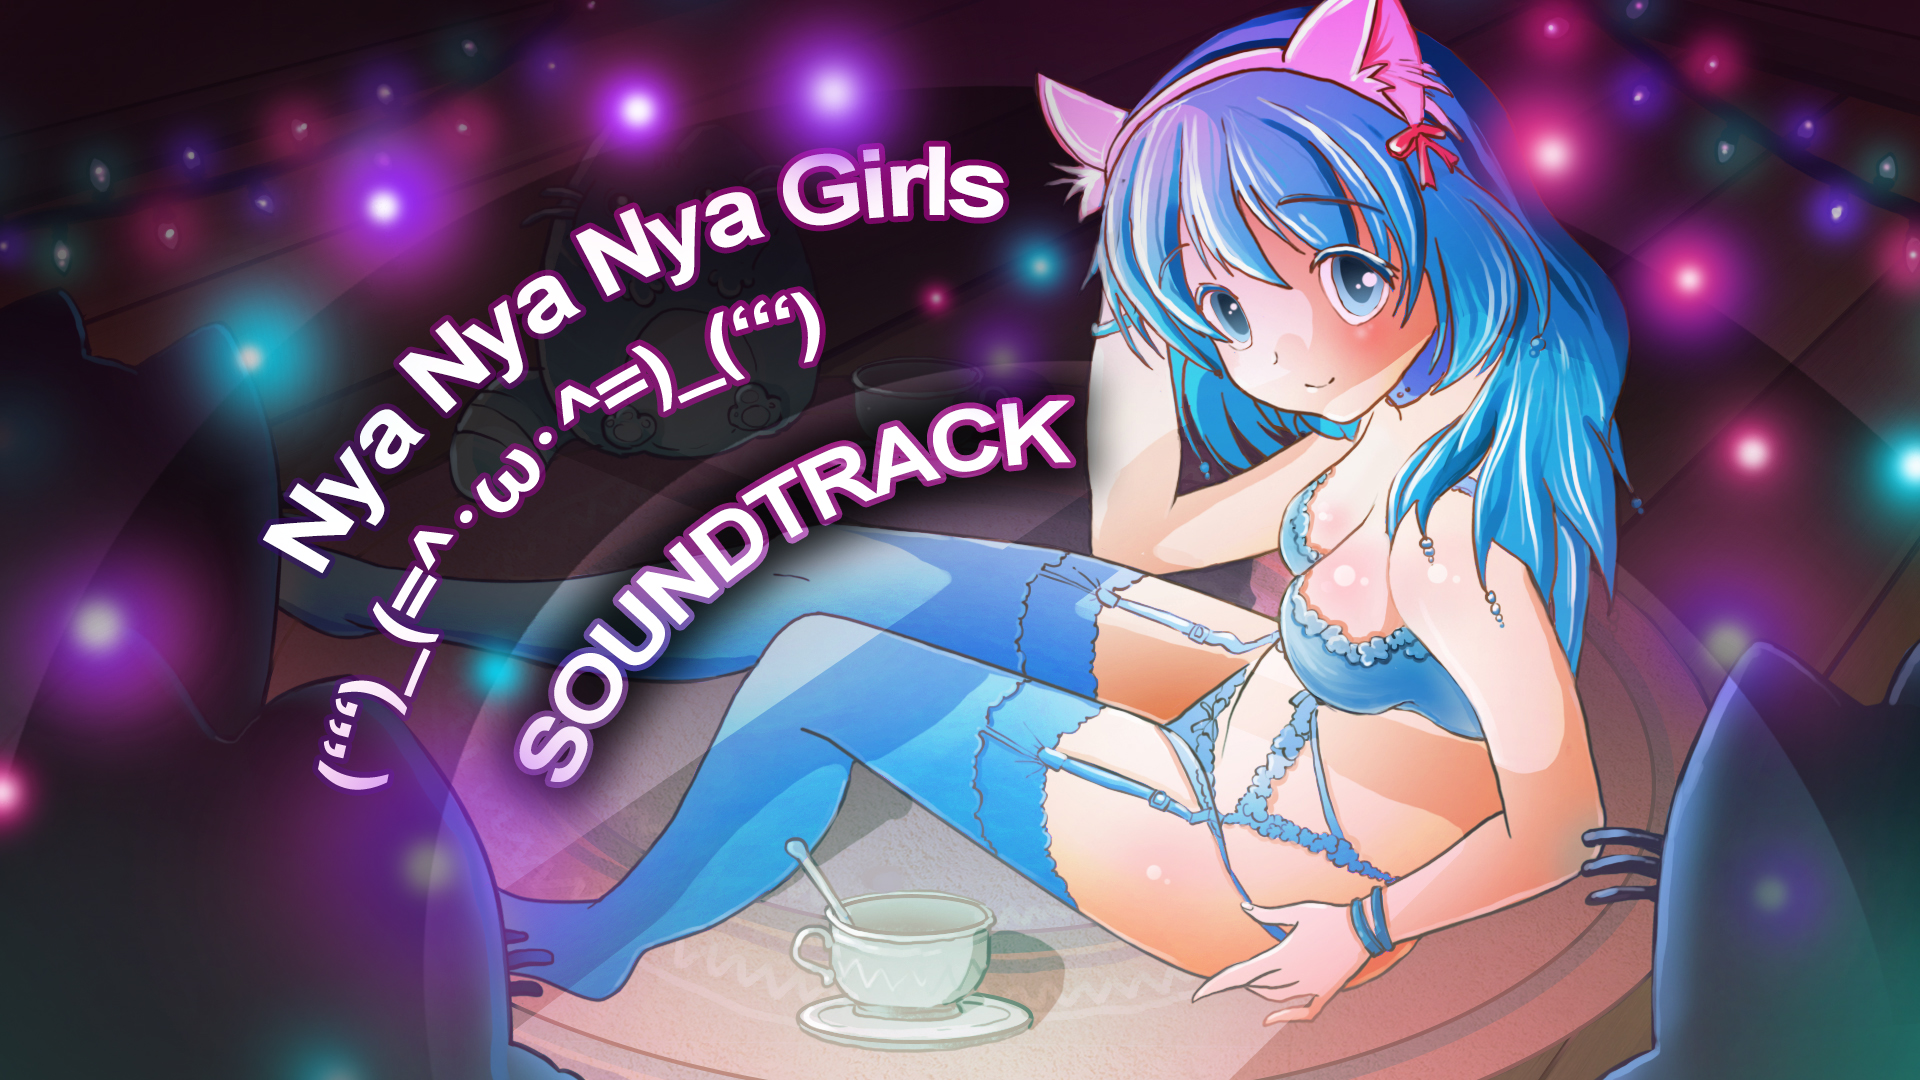 Nya Nya Nya Girls (ʻʻʻ)_(=^･ω･^=)_(ʻʻʻ) - Soundtrack Featured Screenshot #1